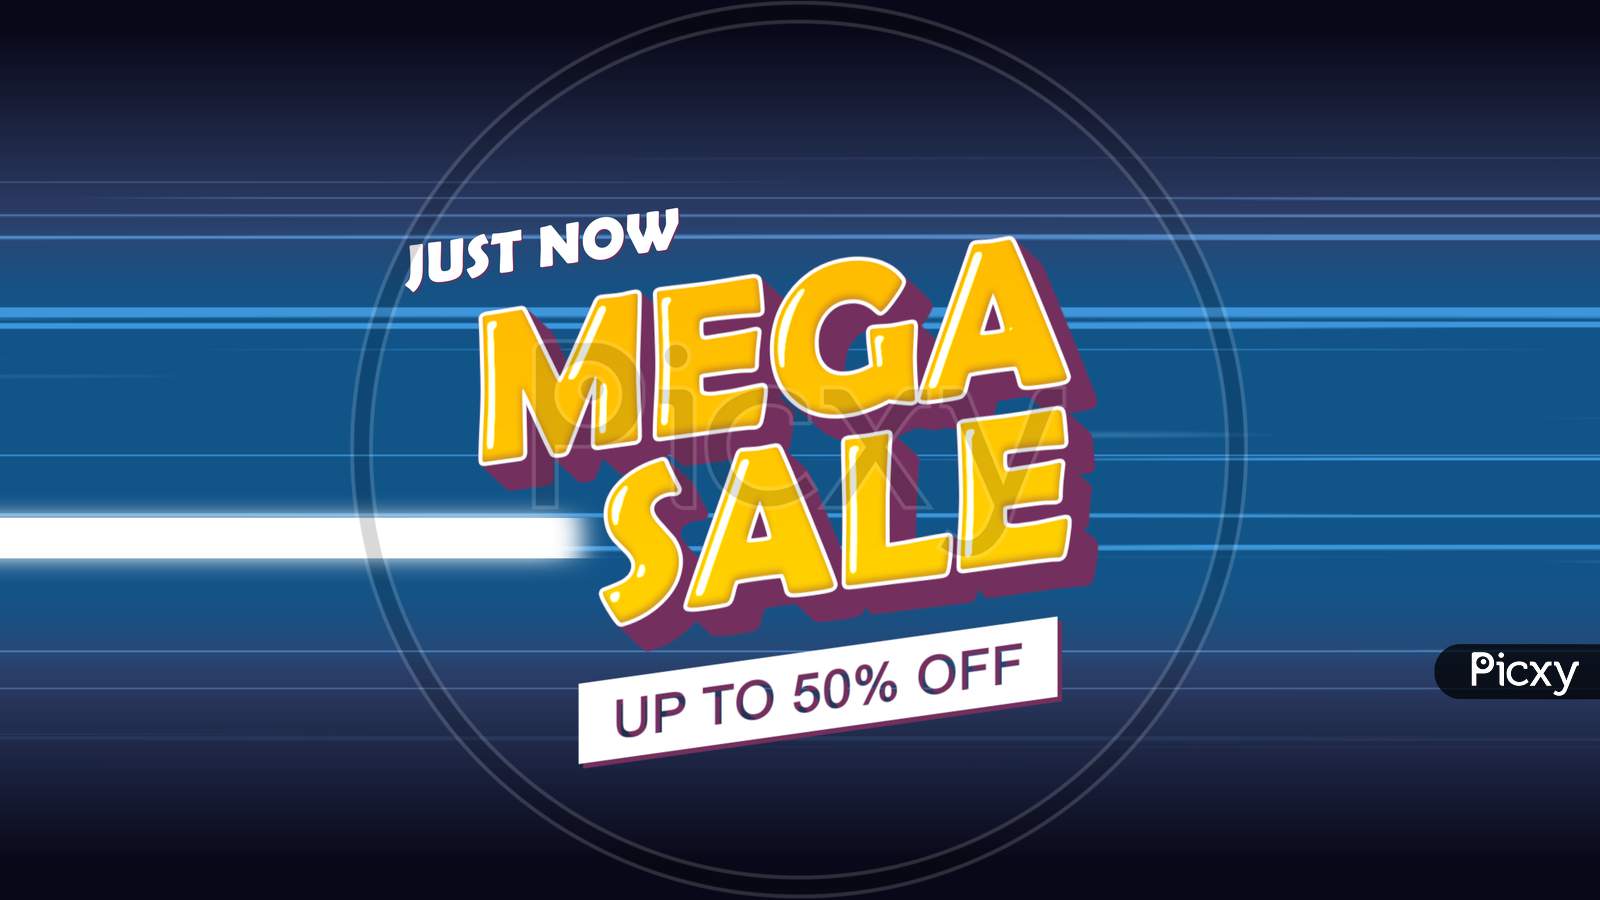 Just Now Mega Sale Up To 50% Off Word Illustration Use For Landing Page,Website, Poster, Banner, Flyer,Sale Promotion,Advertising, Marketing